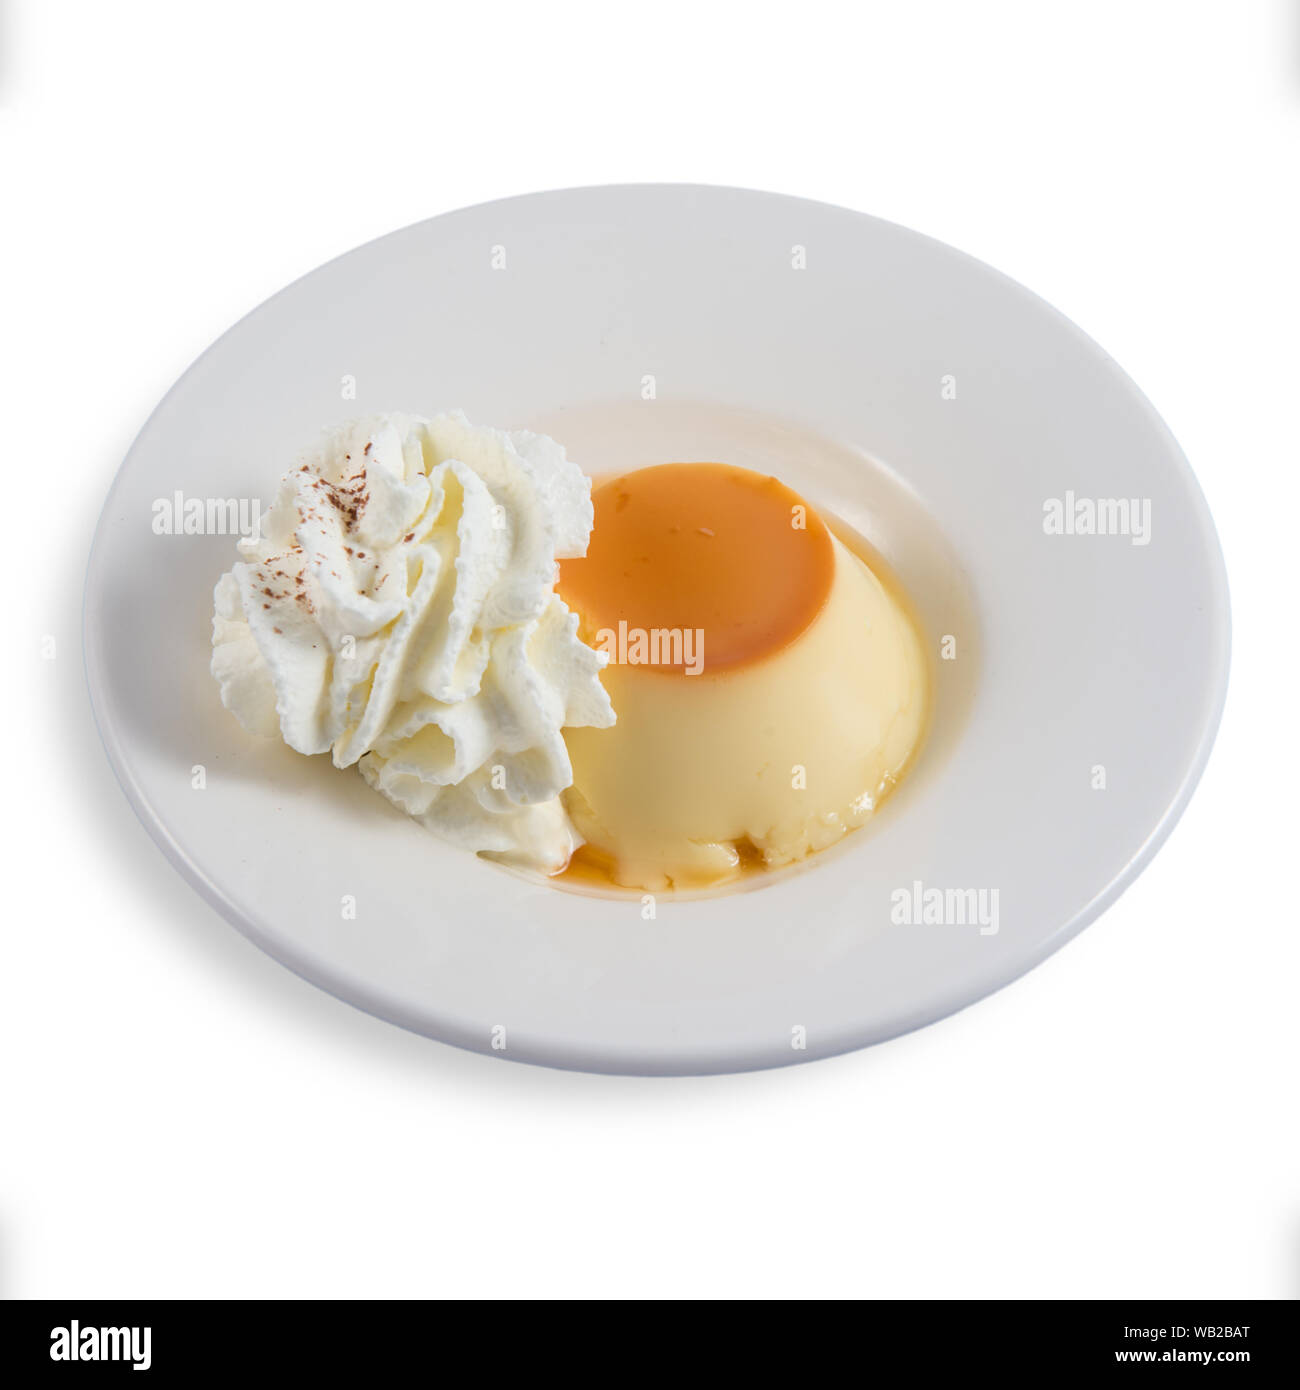 https://c8.alamy.com/comp/WB2BAT/dessert-of-flan-with-cream-WB2BAT.jpg